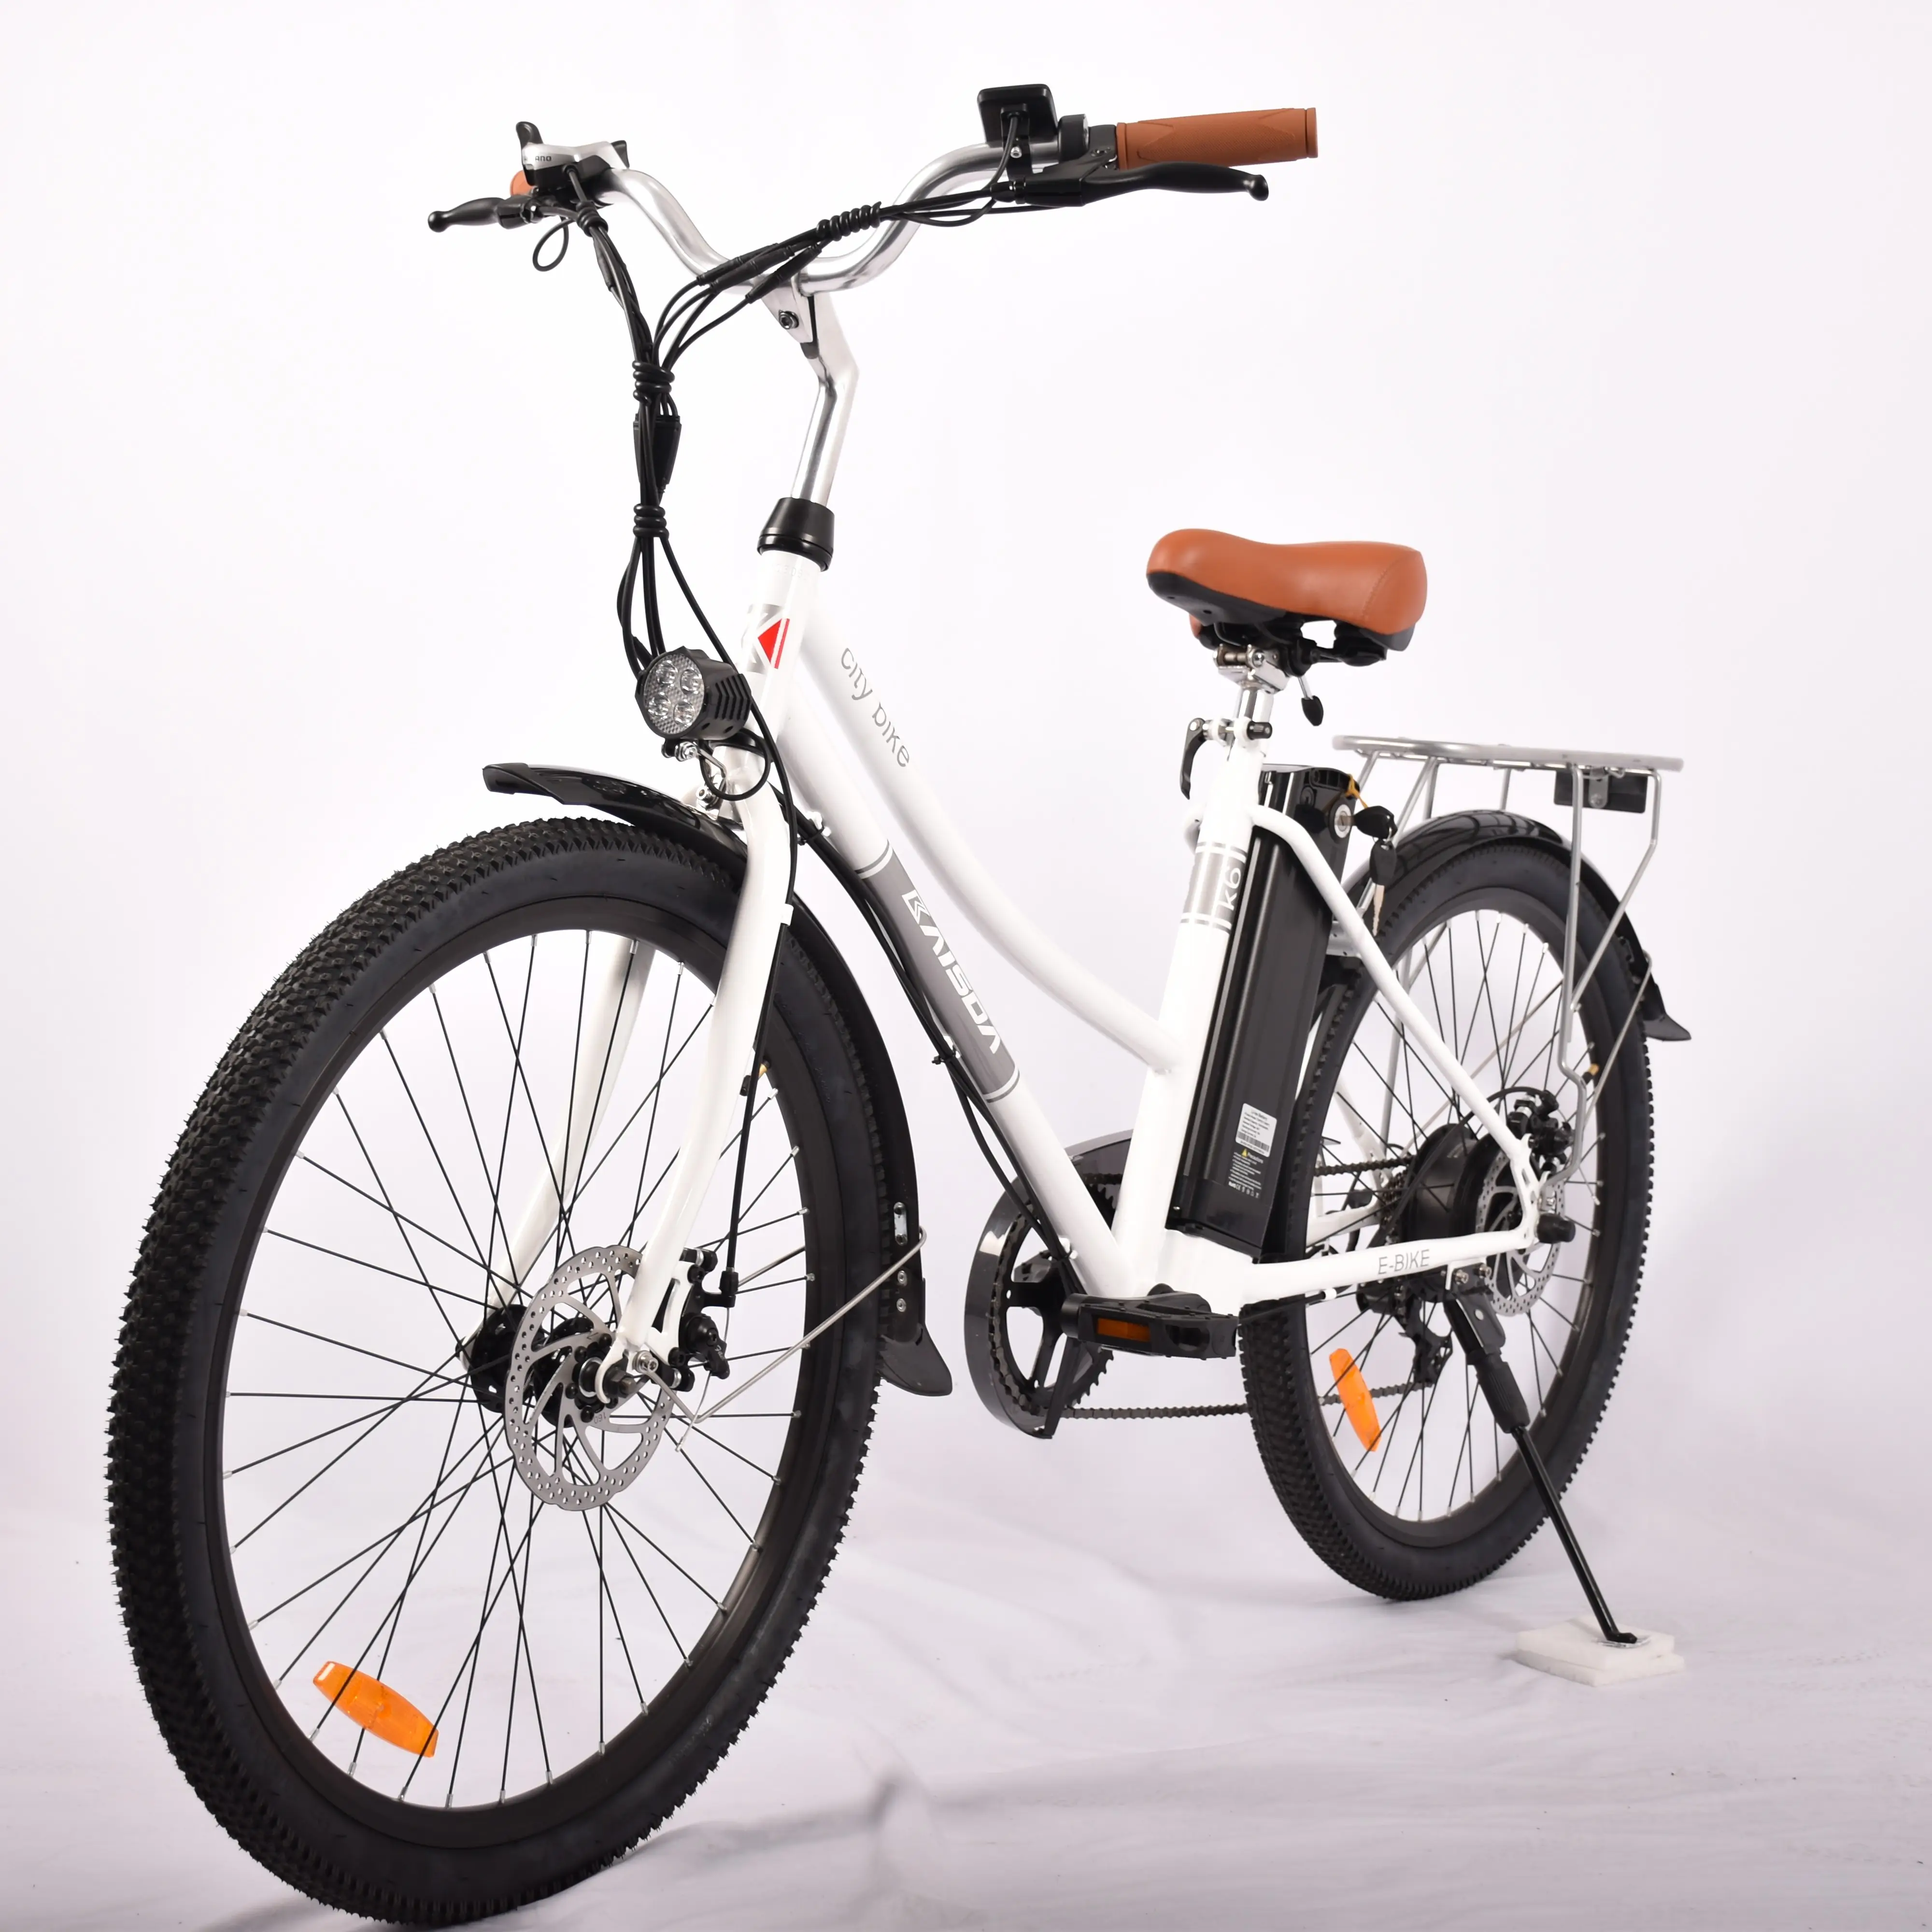 Cheap price fashion design EU warehouse stock good quality electric bike ebike fat tyre model K6 ready to ship